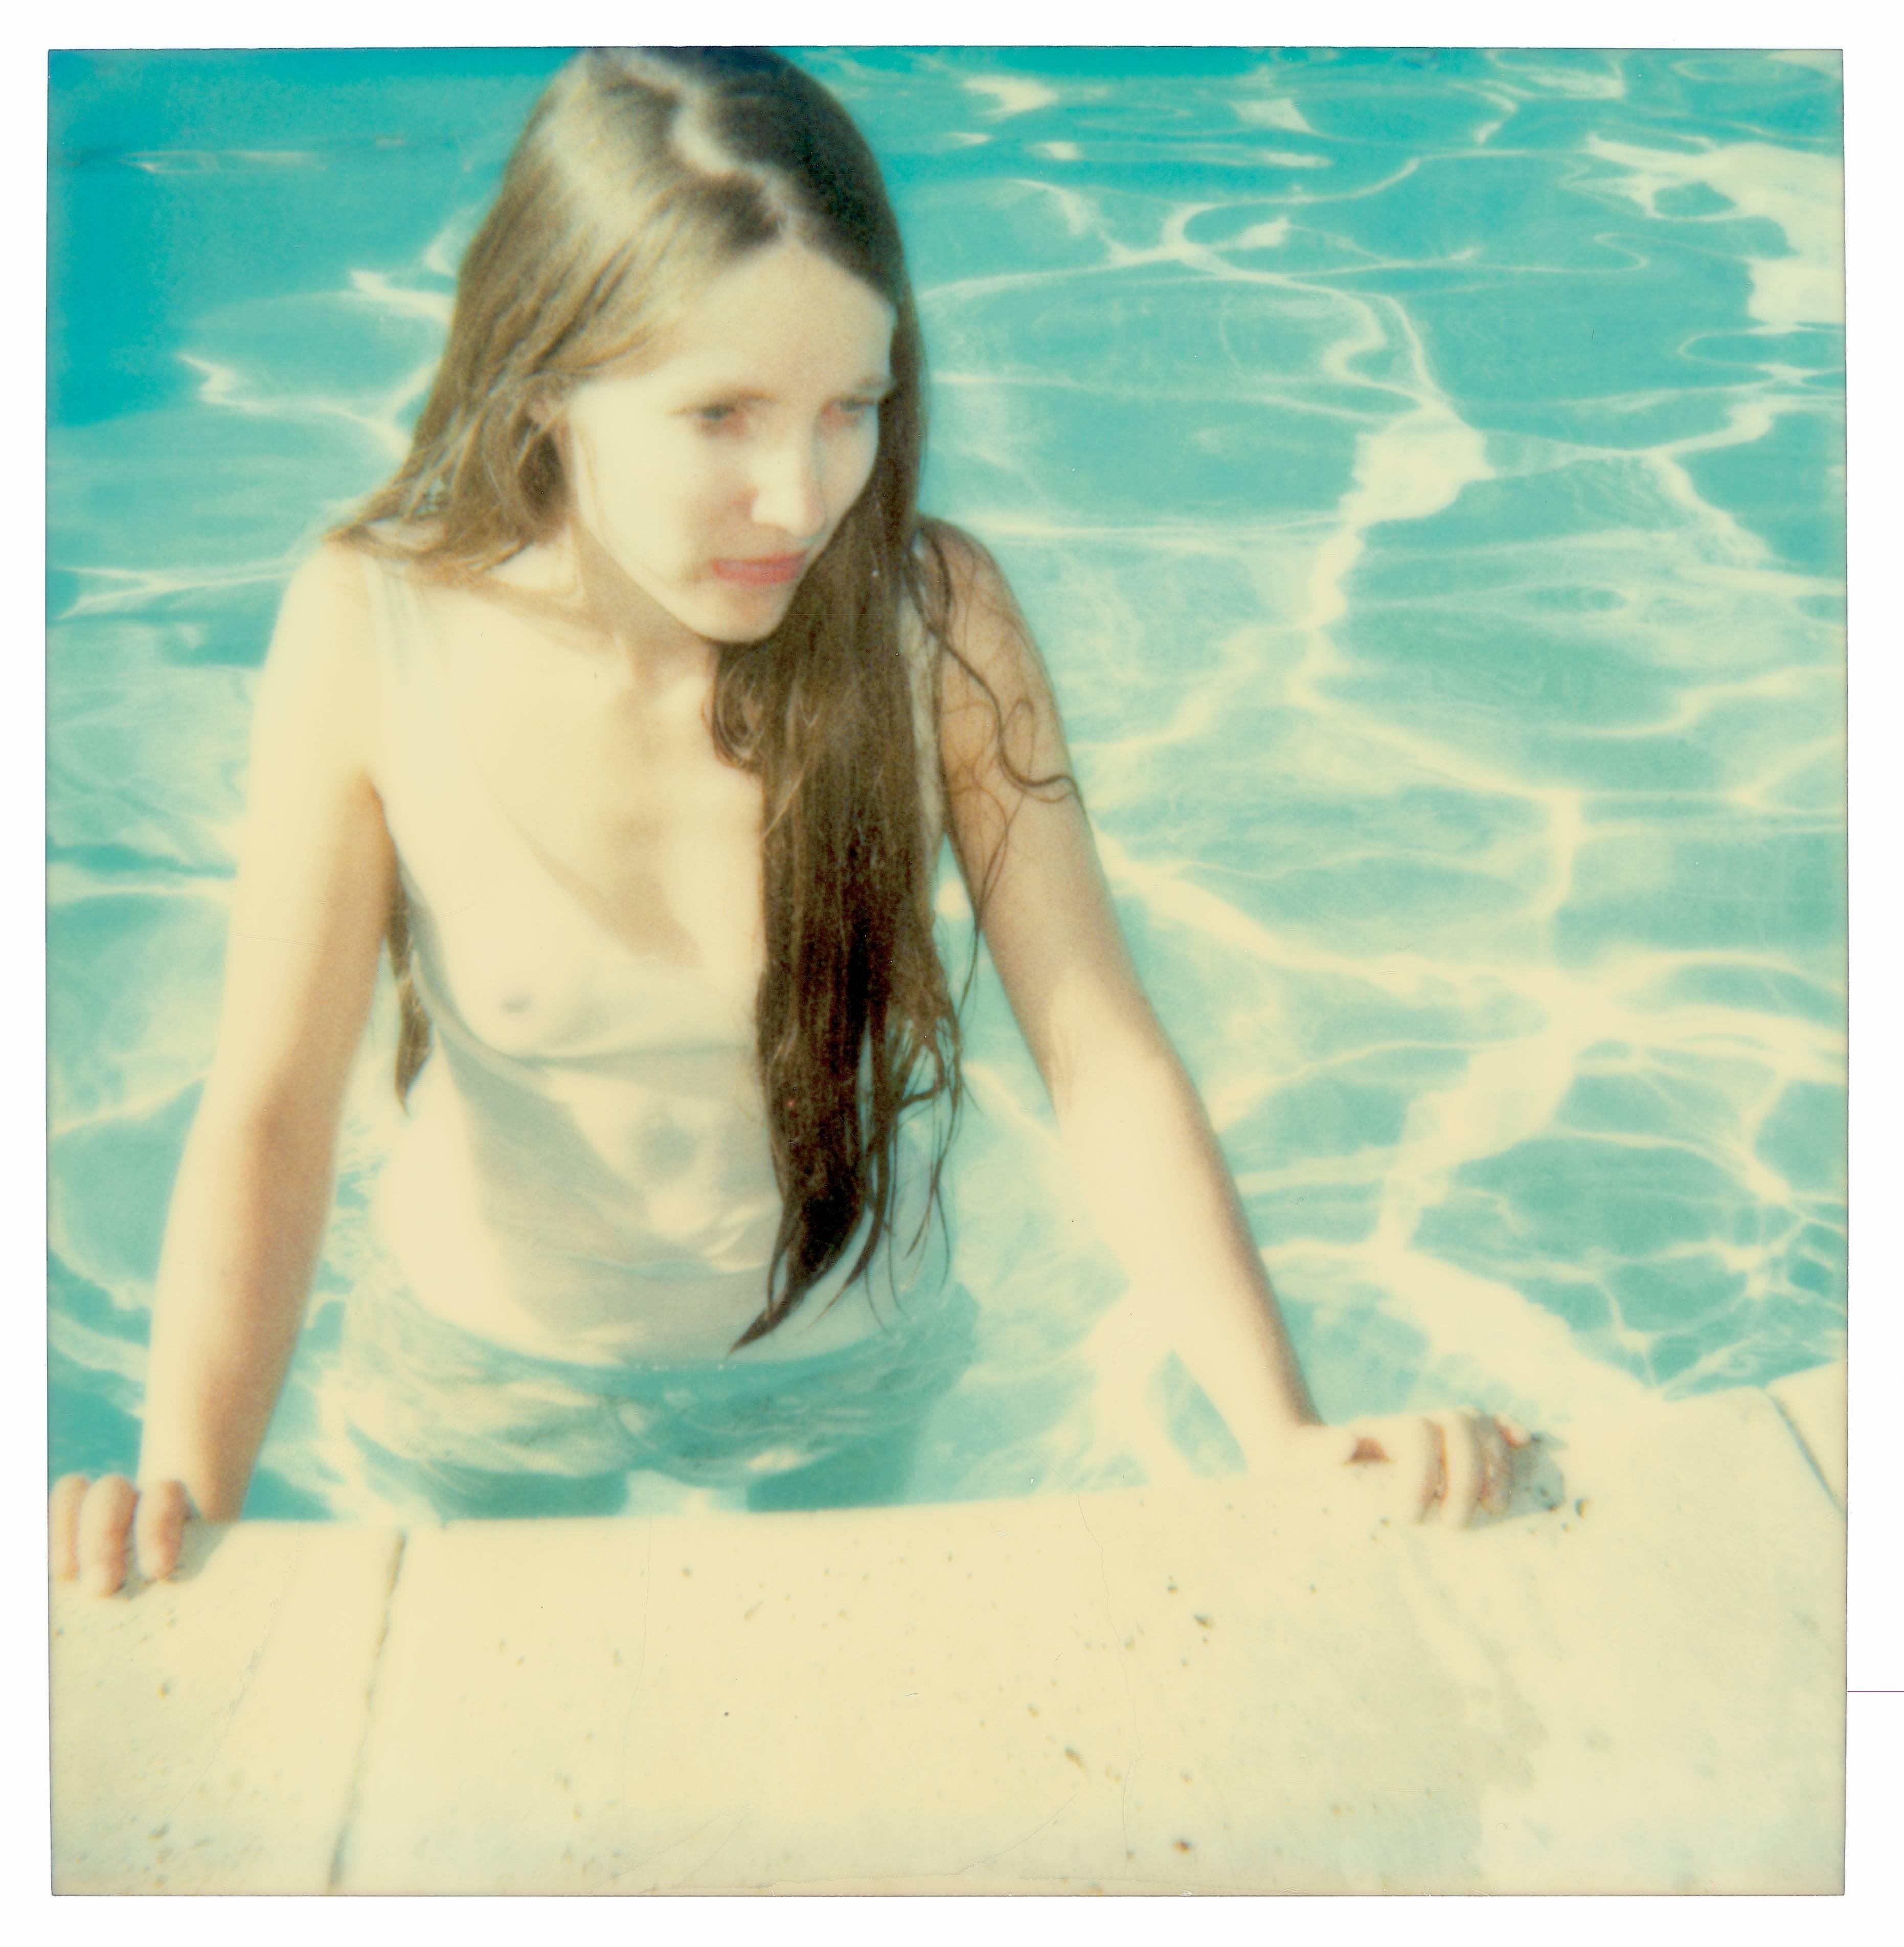 Stefanie Schneider Portrait Photograph - Pool Side - 29 Palms, CA - 58x56cm, analog C-Print, hand-printed by the artist